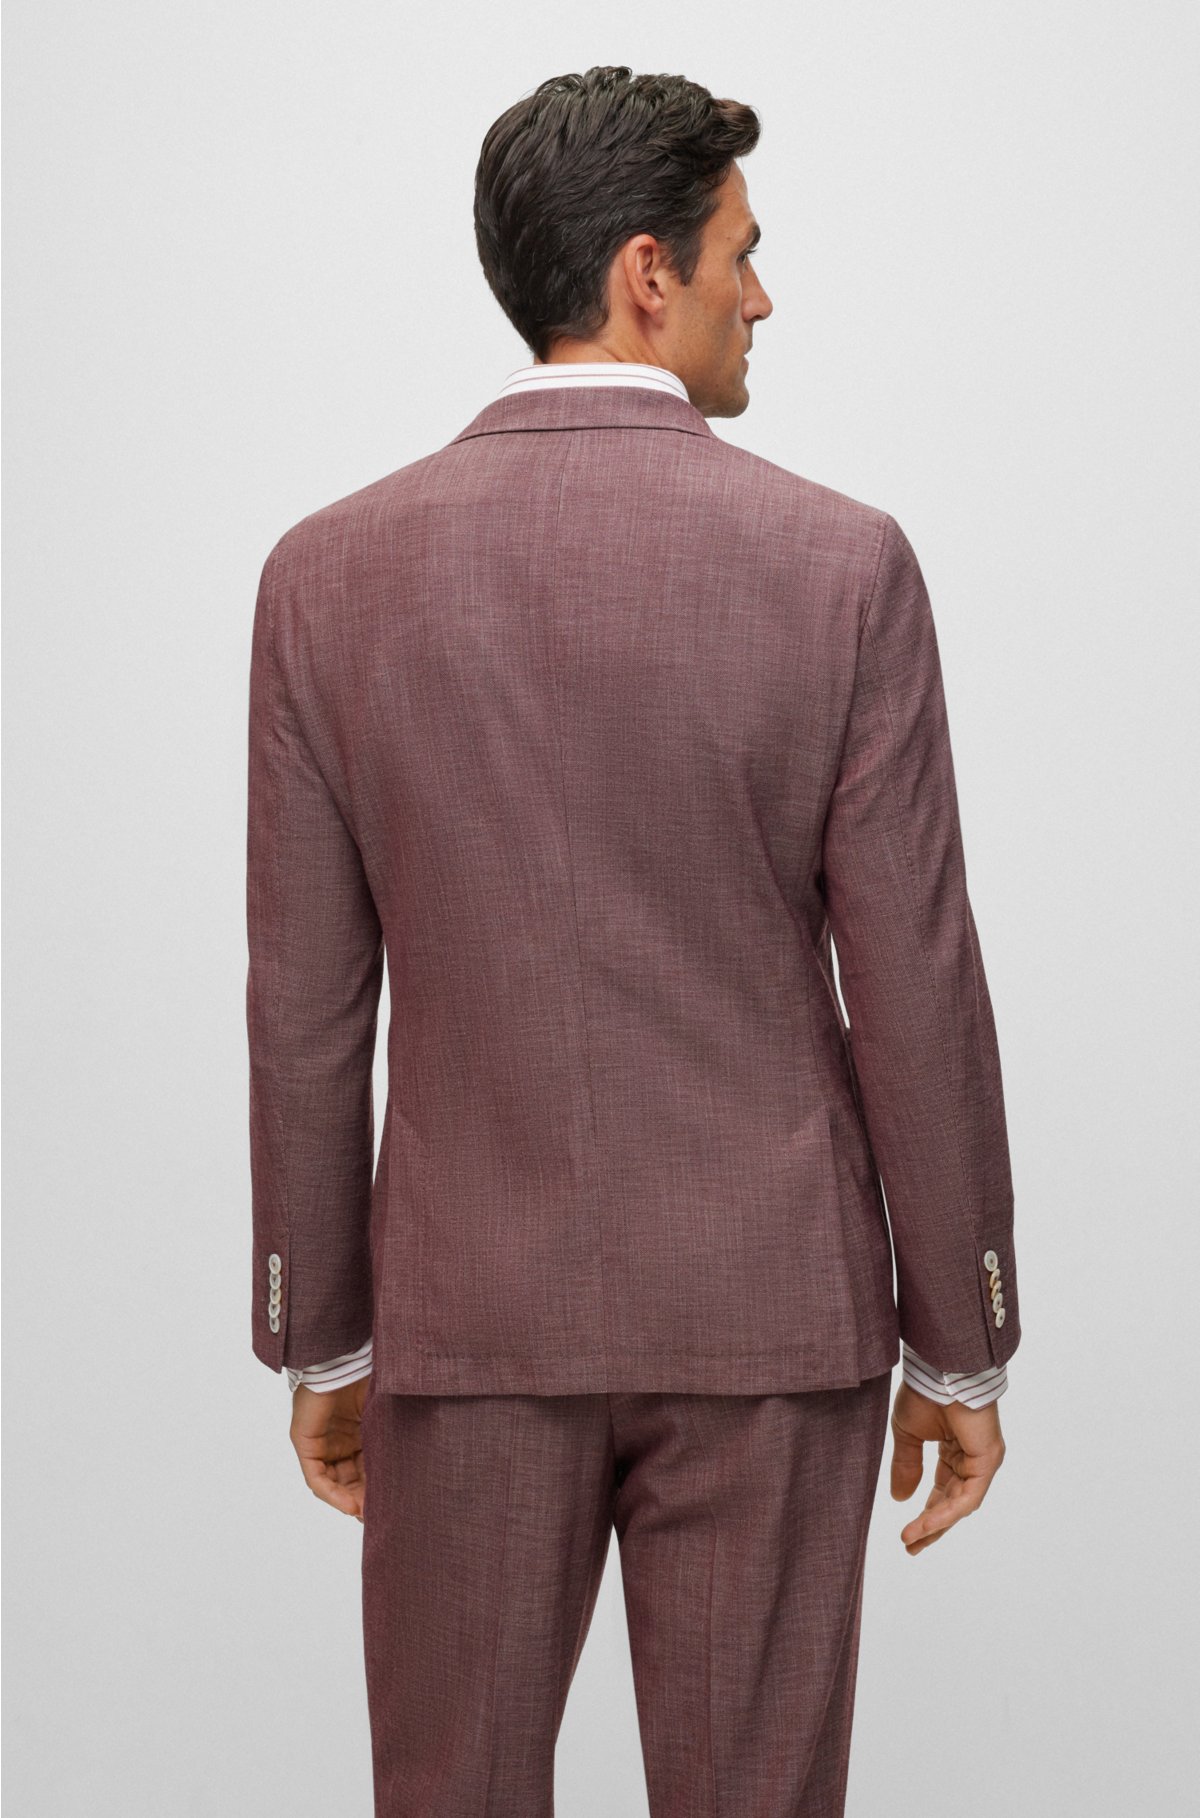 Slim-fit suit in a patterned wool blend, Dark Red